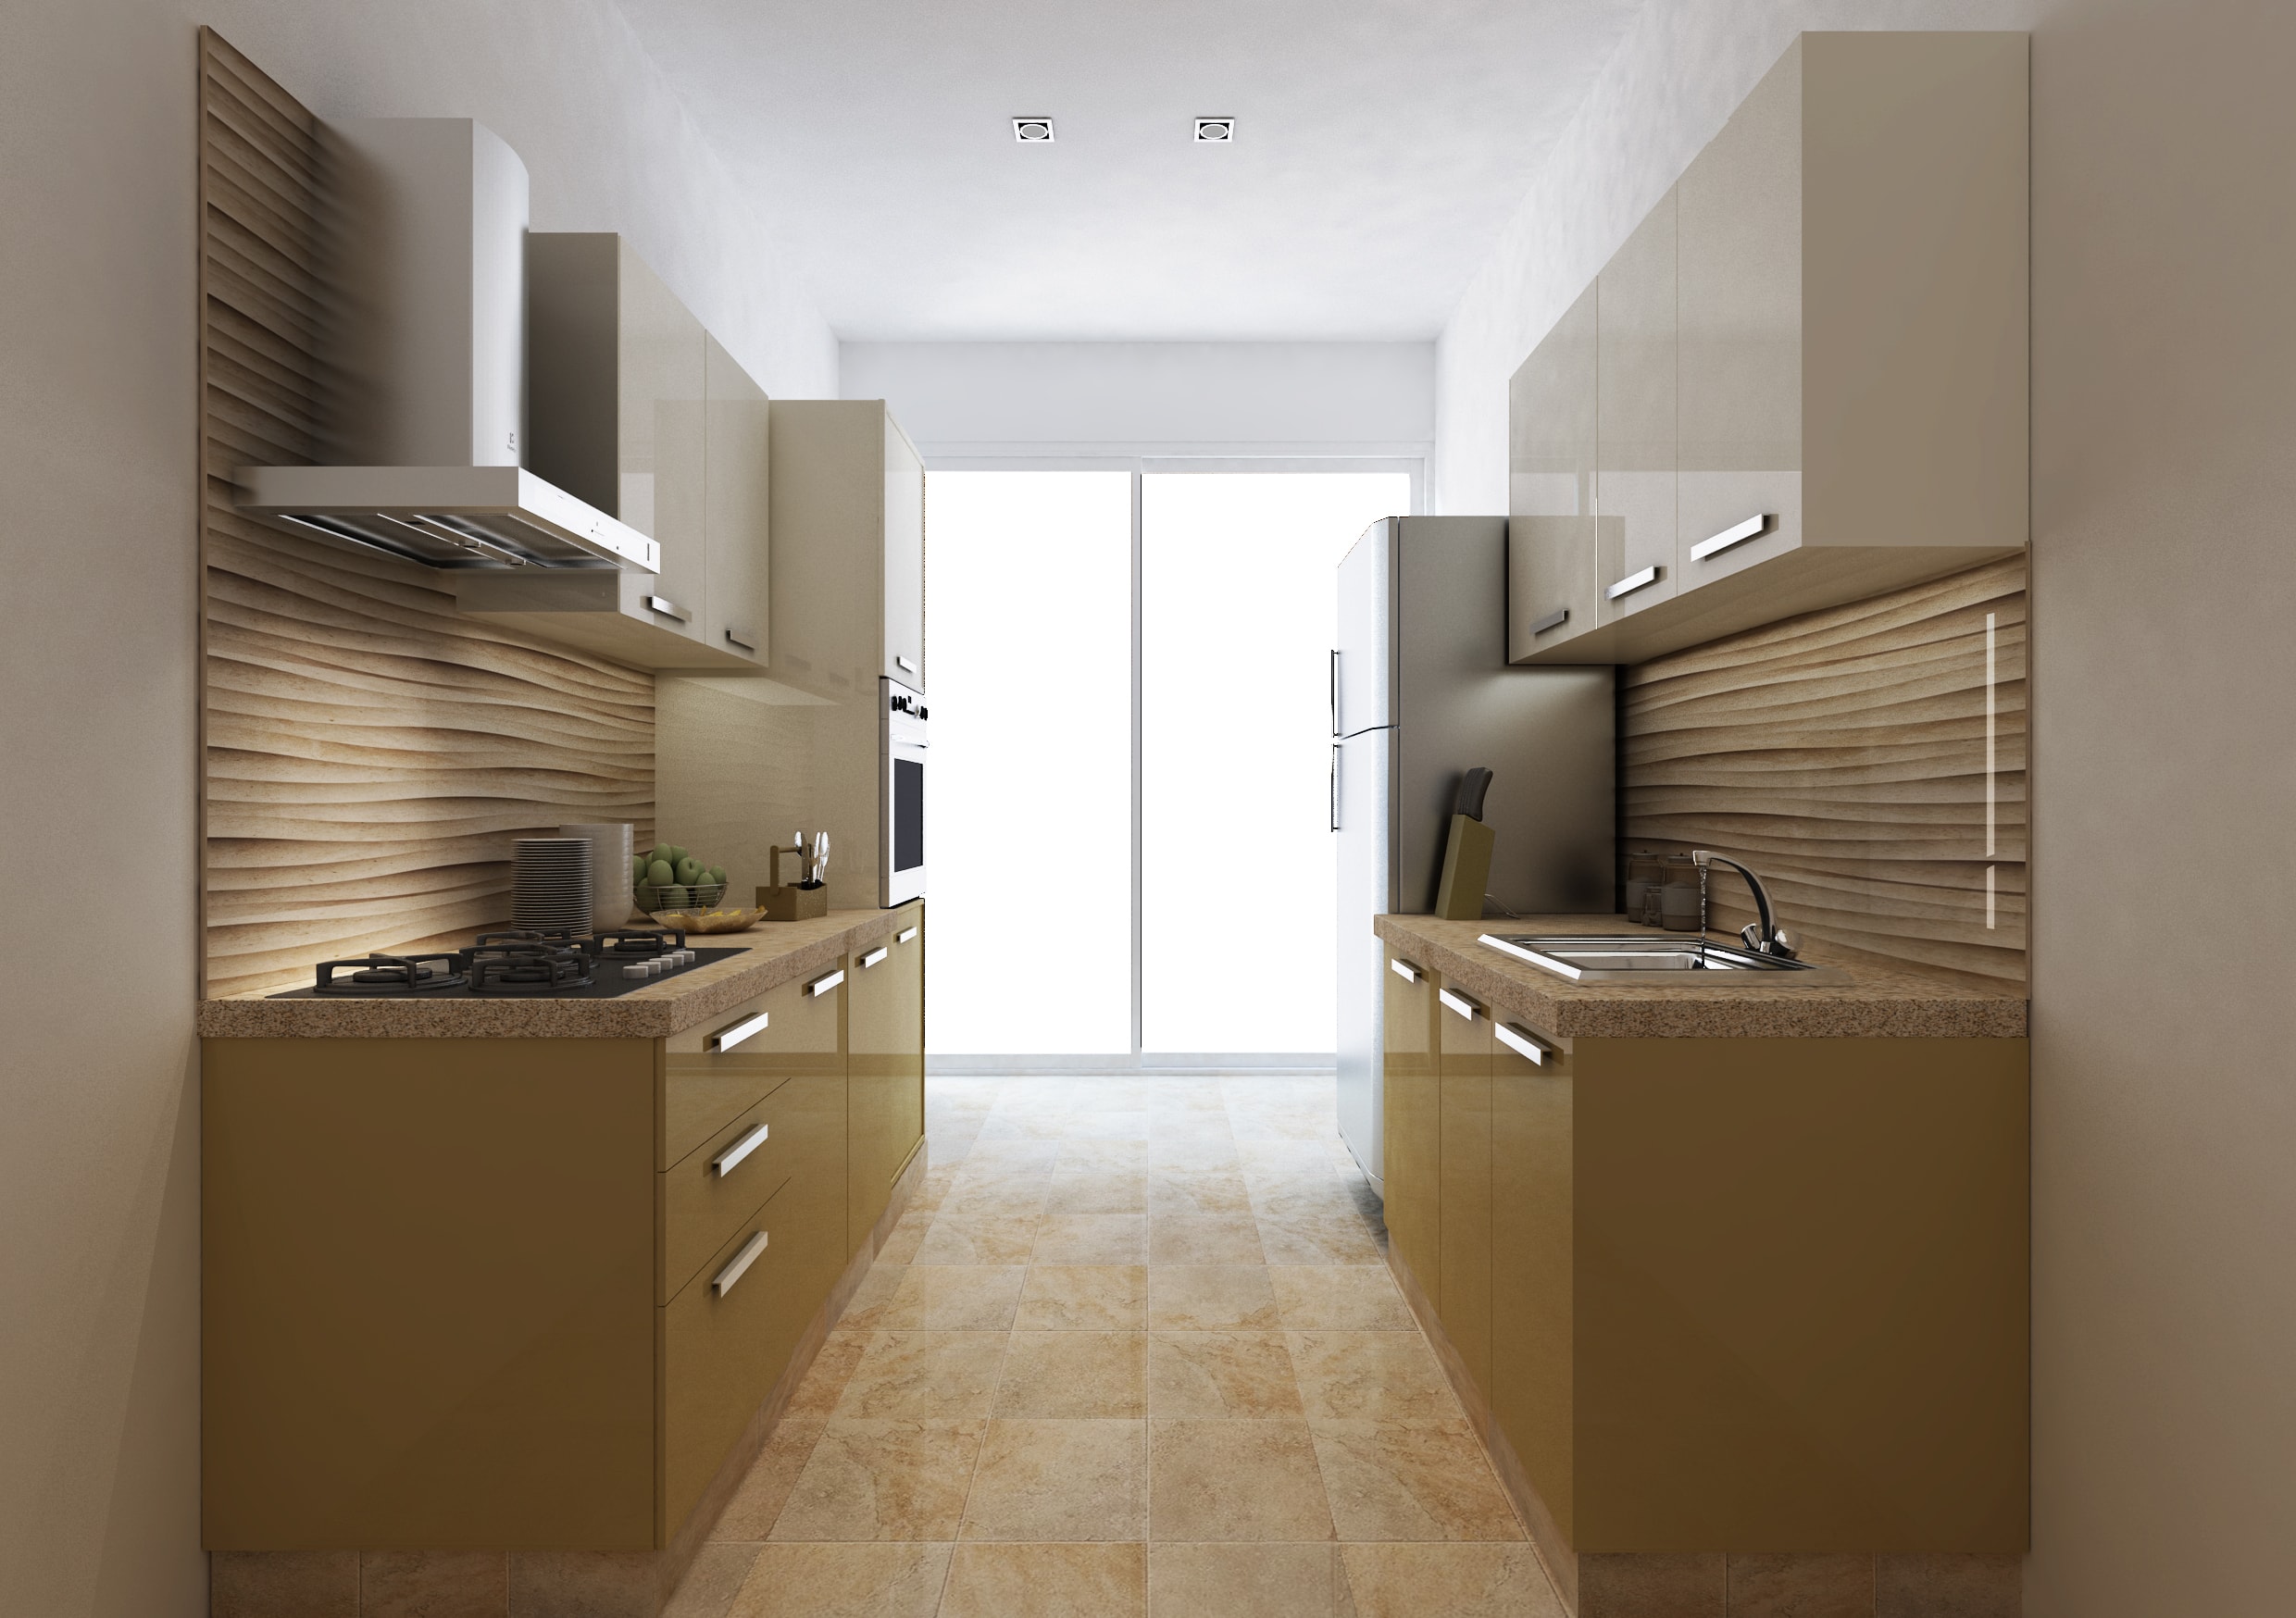 parallel kitchen design india